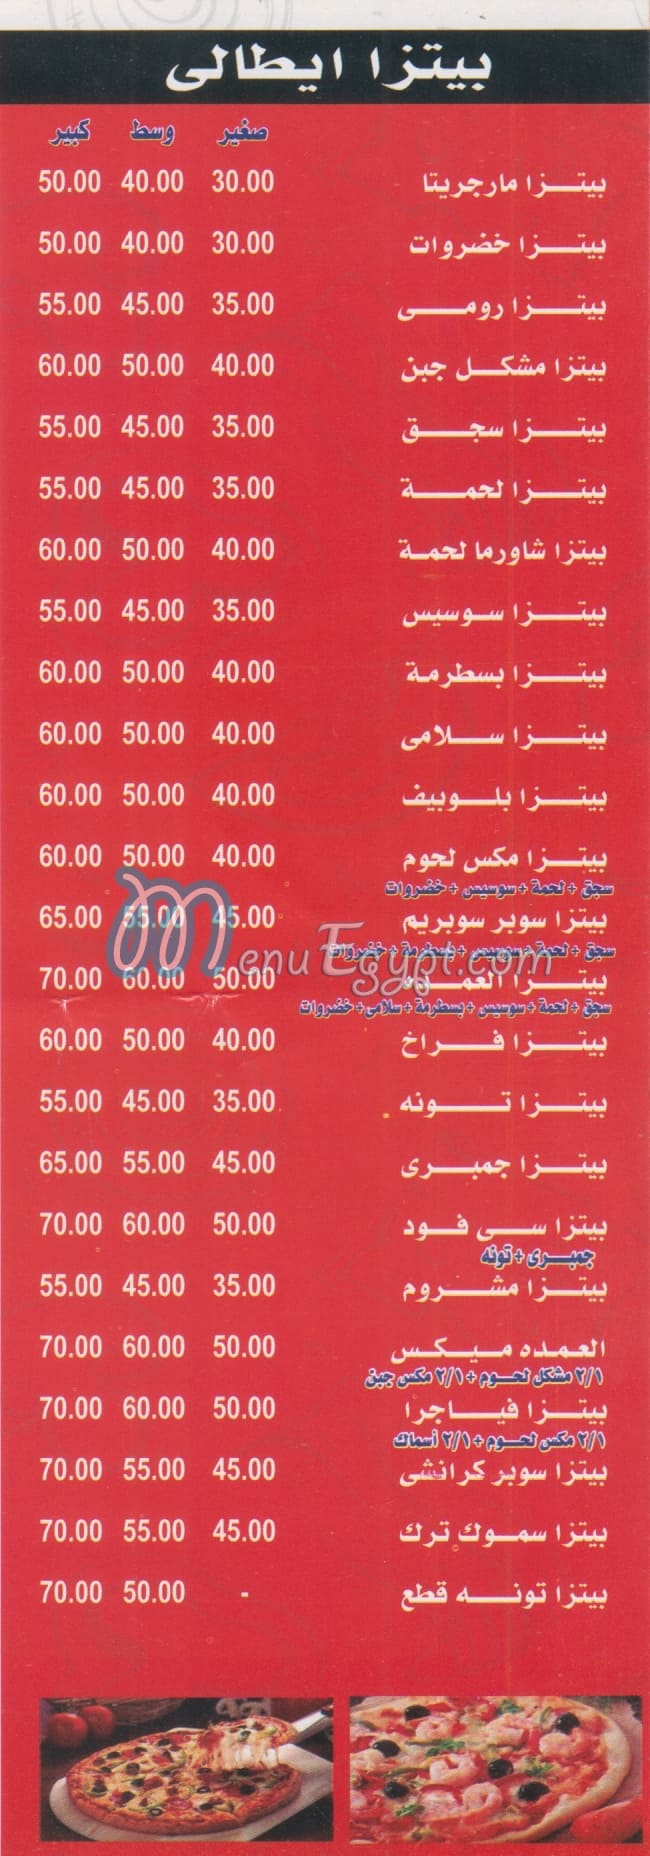 Koshary El Omda menu Egypt 1